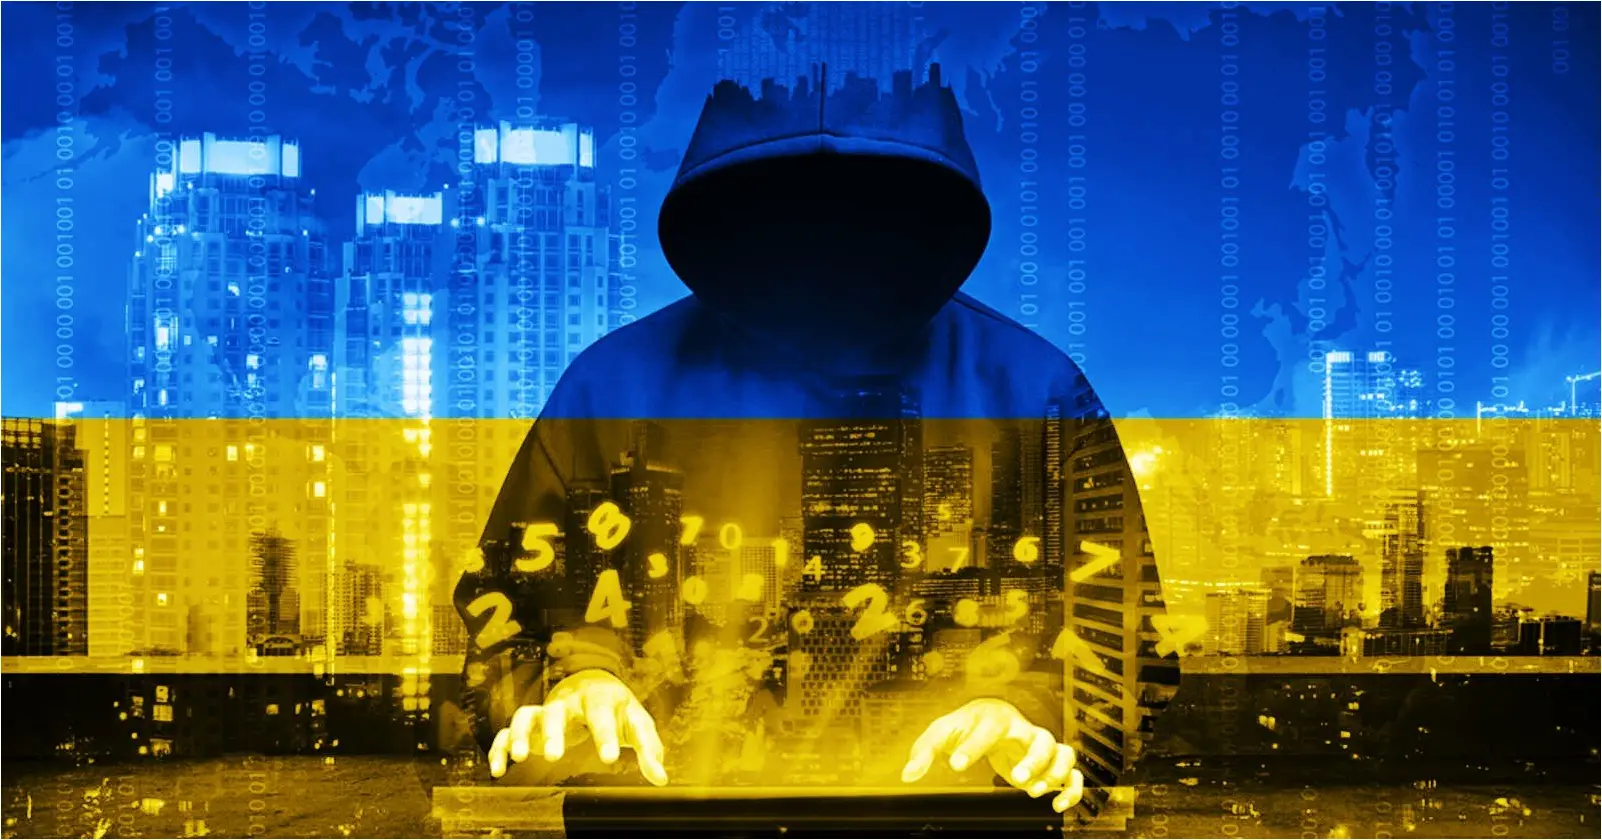 Ukrainian hacker